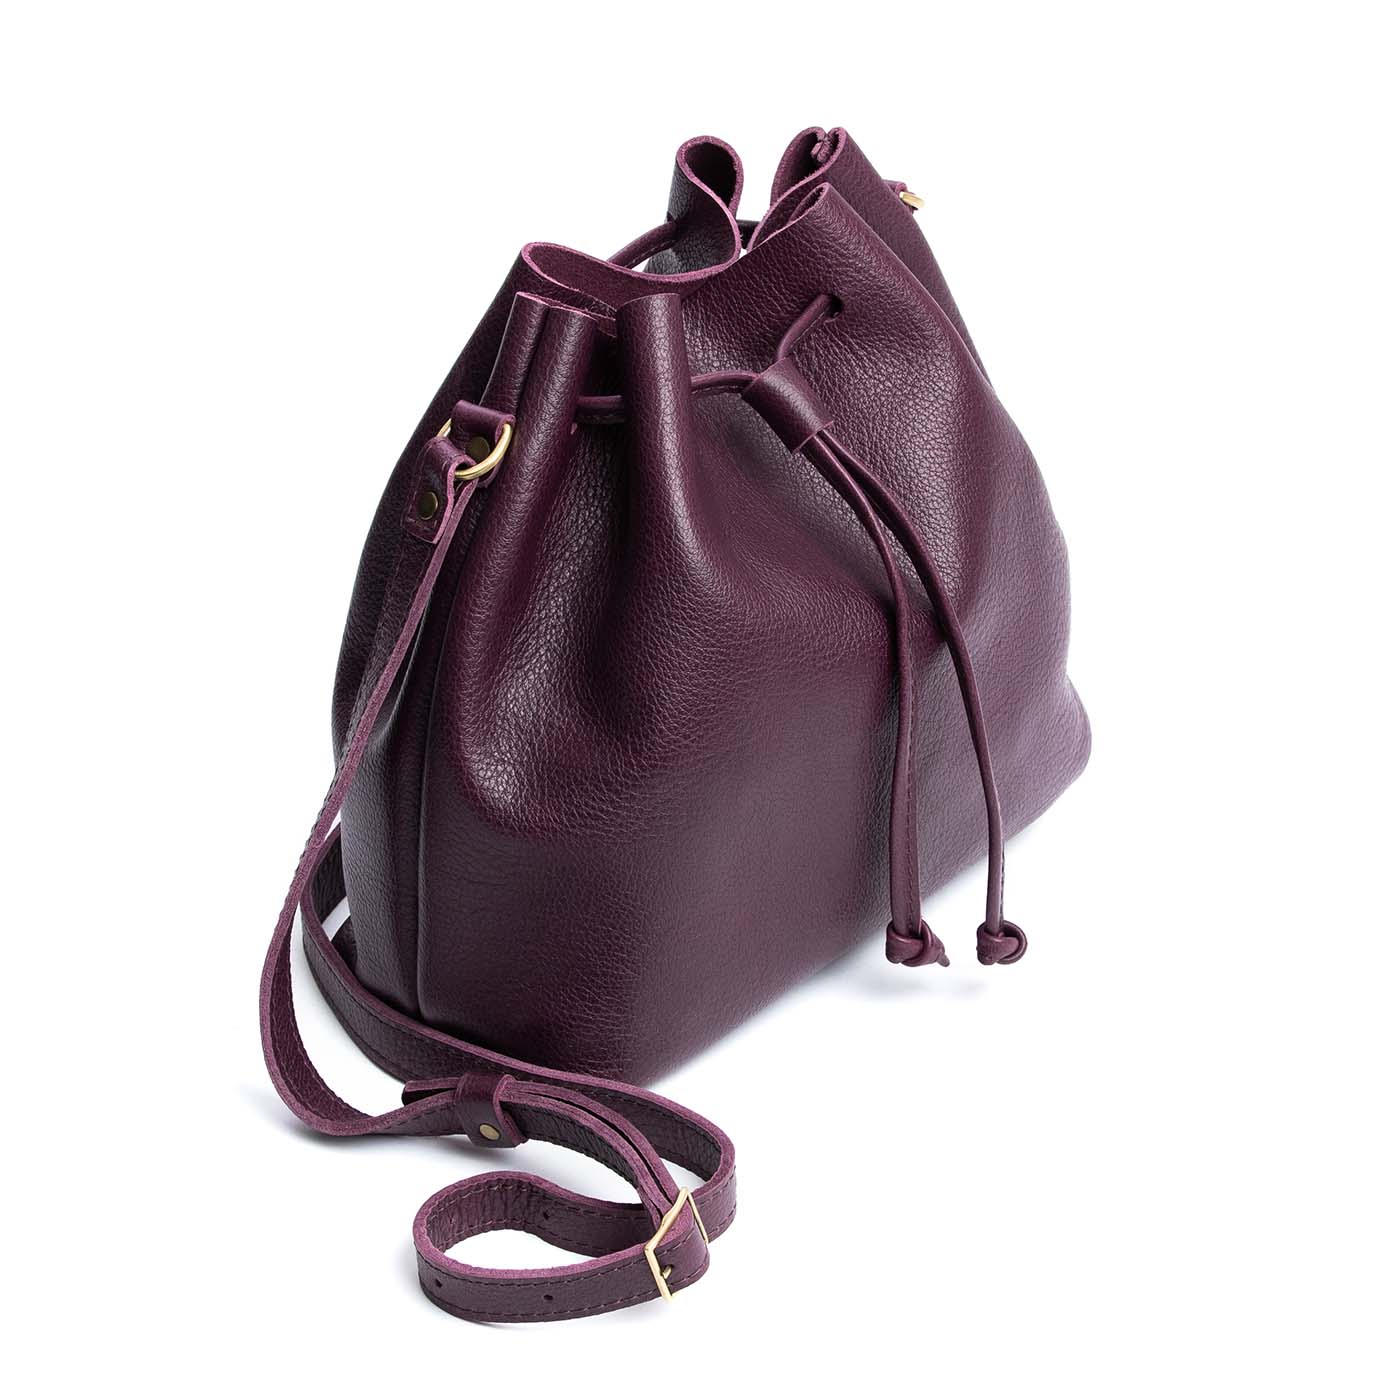 Leather Bucket Bags – Portland Leather